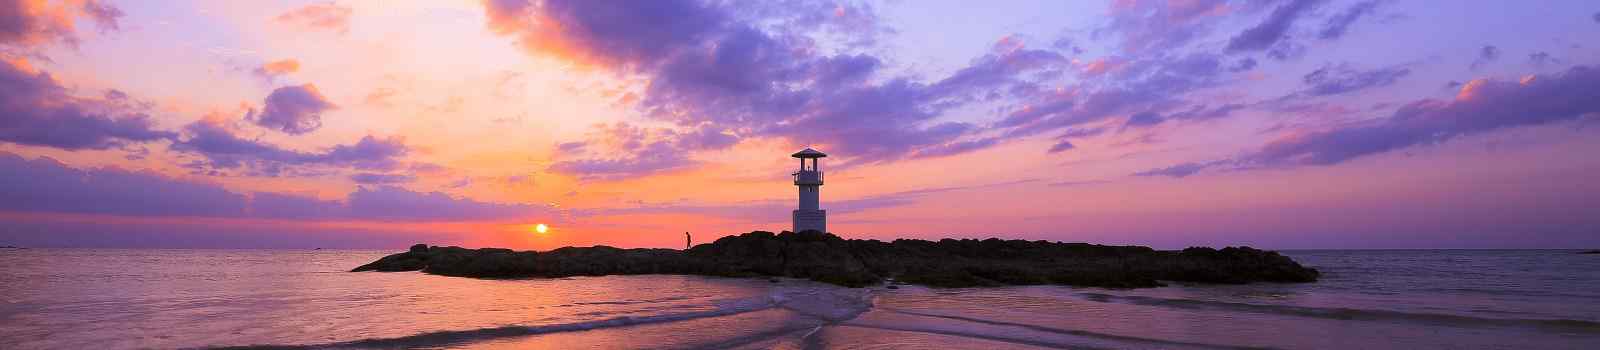  Lighthouse searchlight beam near ocean at sunset shutterstock 463686620